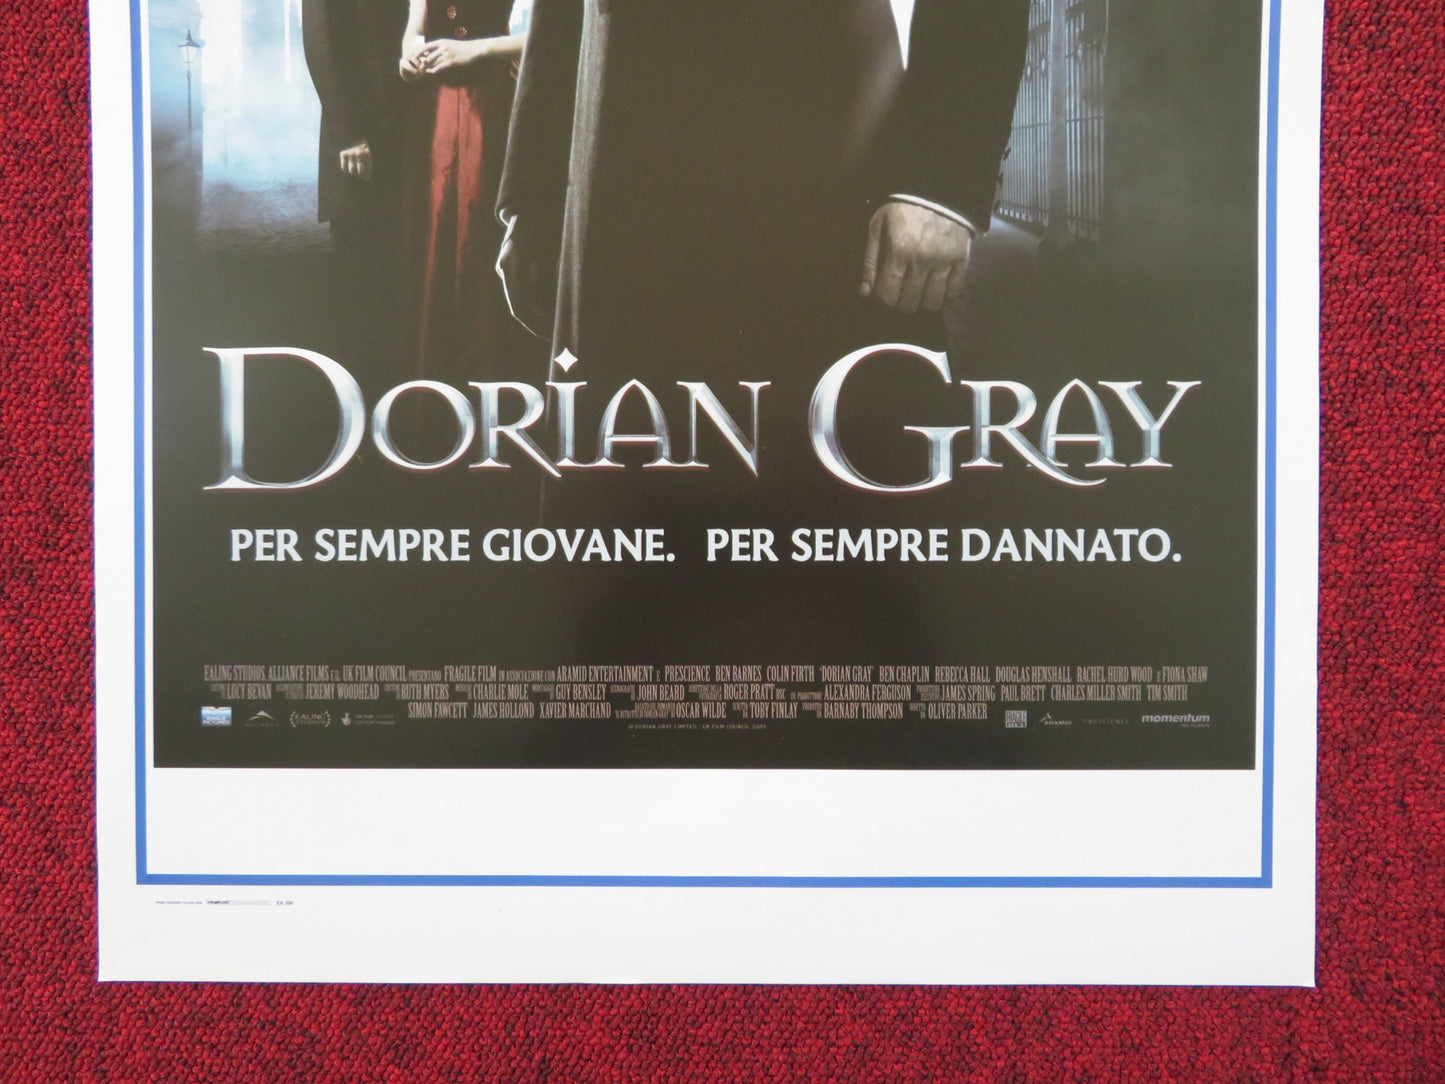 DORIAN GRAY ITALIAN LOCANDINA POSTER BEN BARNES COLIN FIRTH 2009